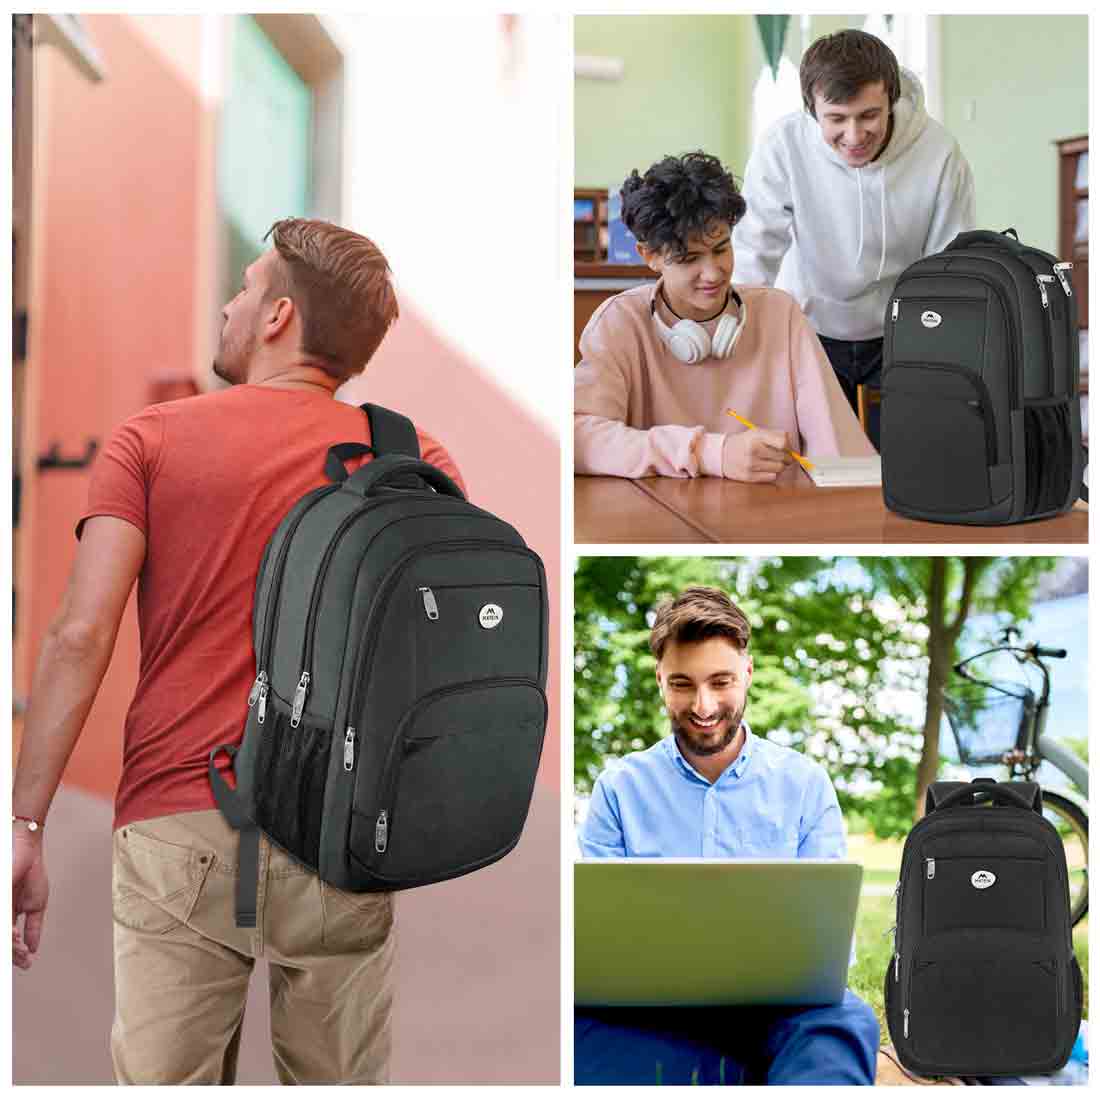 Order Custom Laptop Bags UK - Promotional Laptop Bags Online - Bespoke Laptop  Bags & Backpacks | Rocket Bags